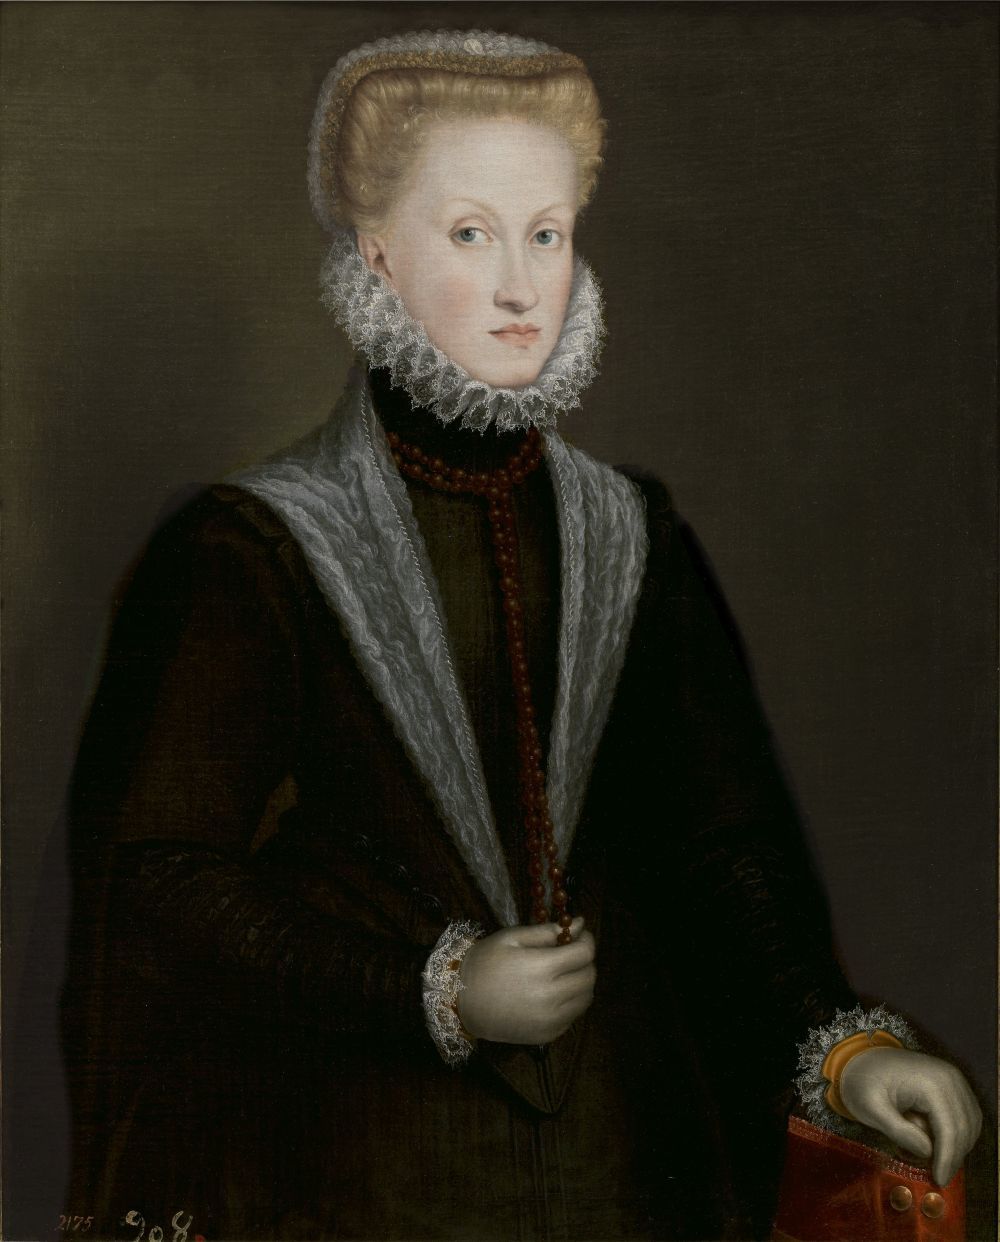 La reina Ana de Austria, de Sofonisba Anguissola, 1573